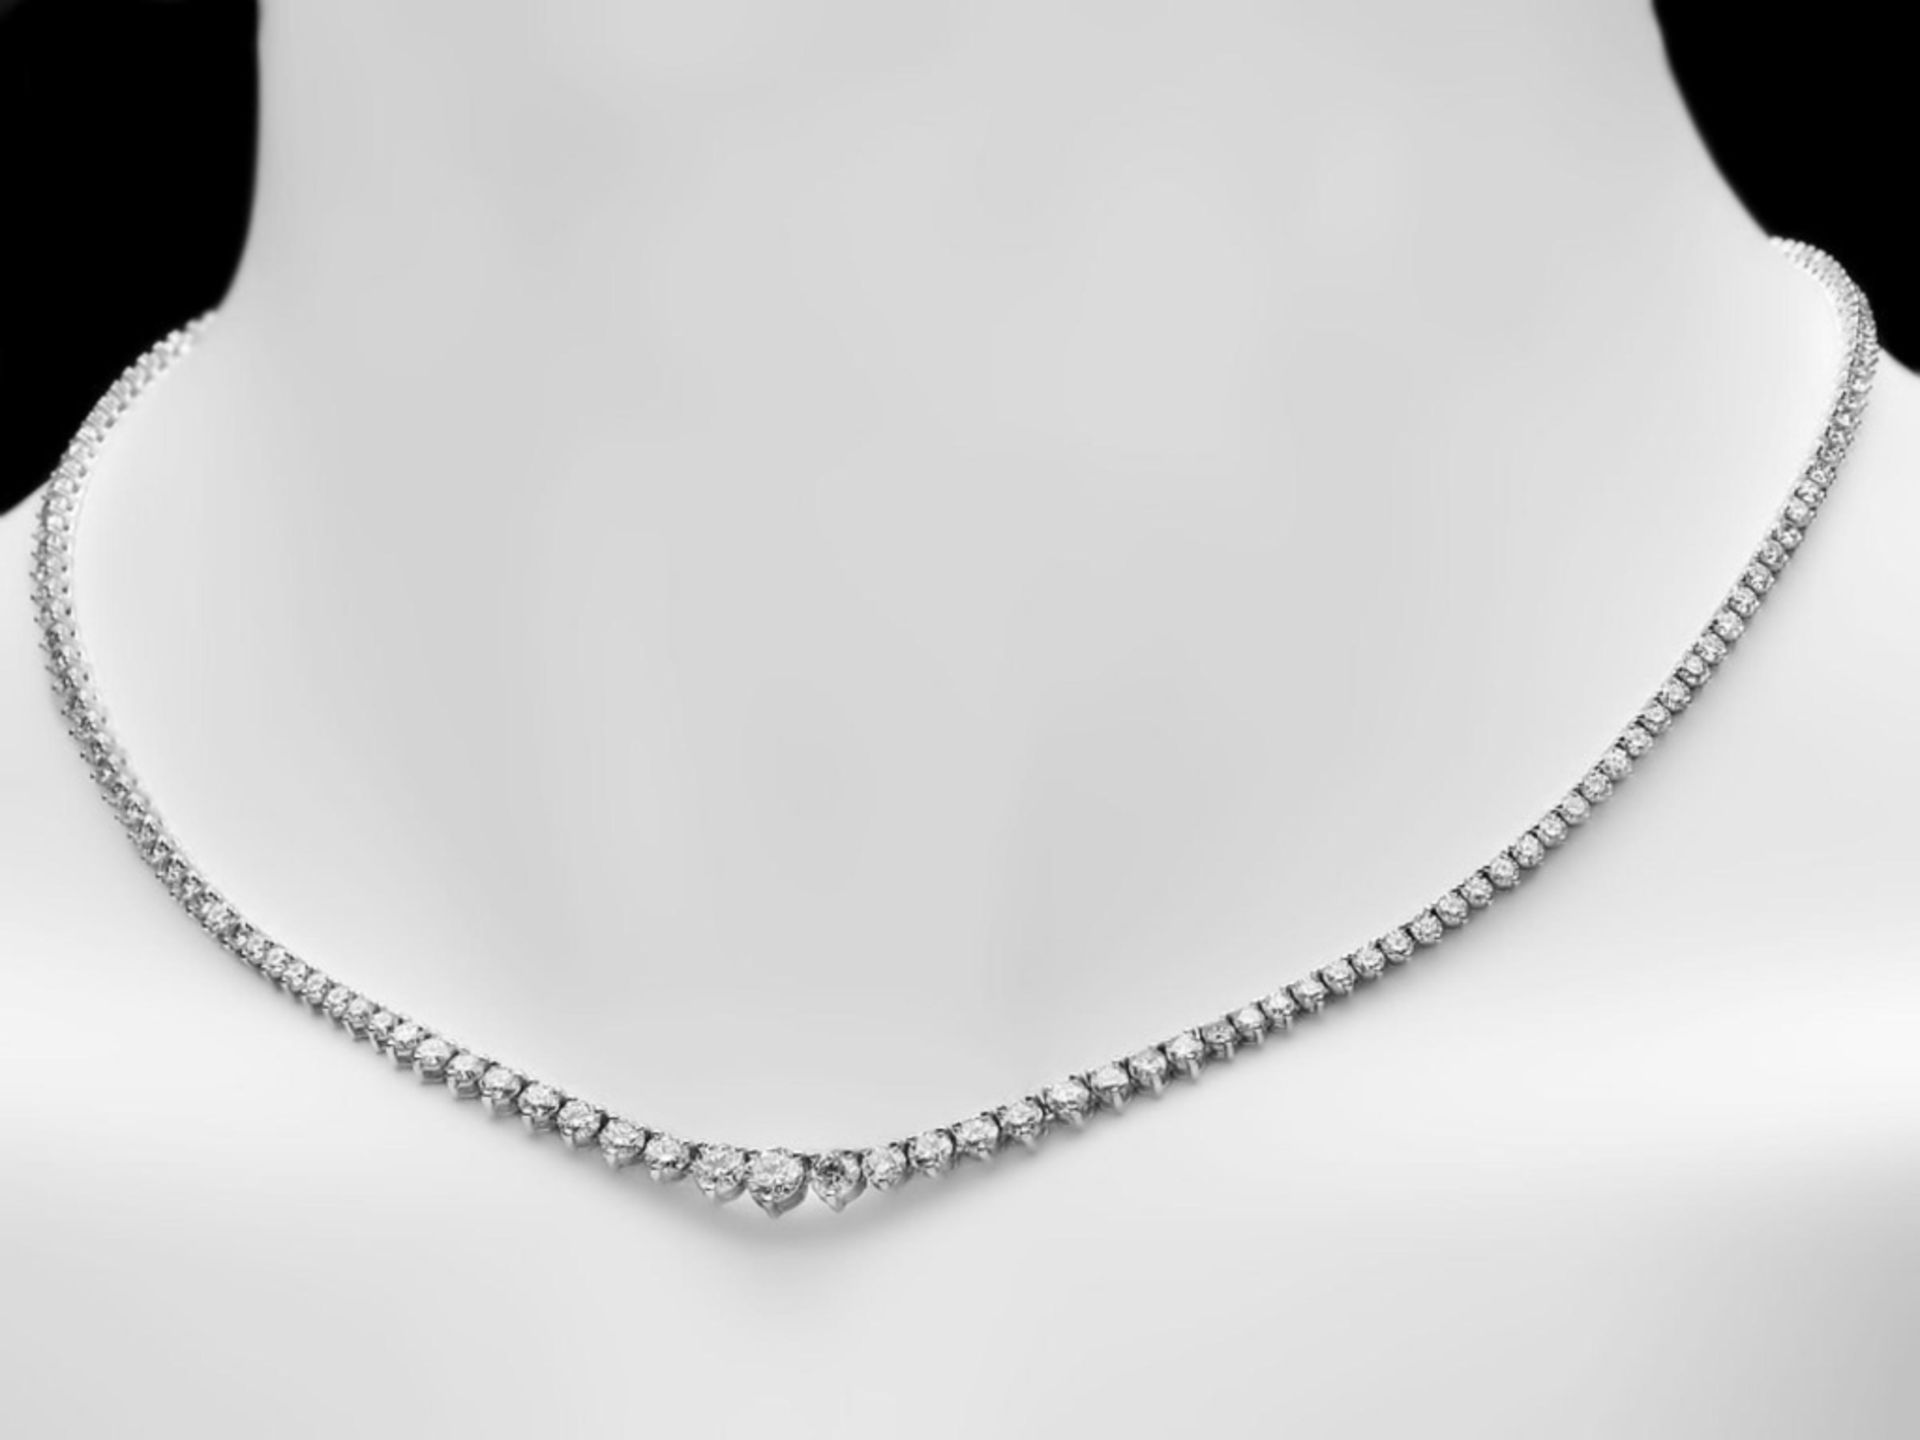 ^18k White Gold 9.00ct Diamond Necklace - Image 2 of 5